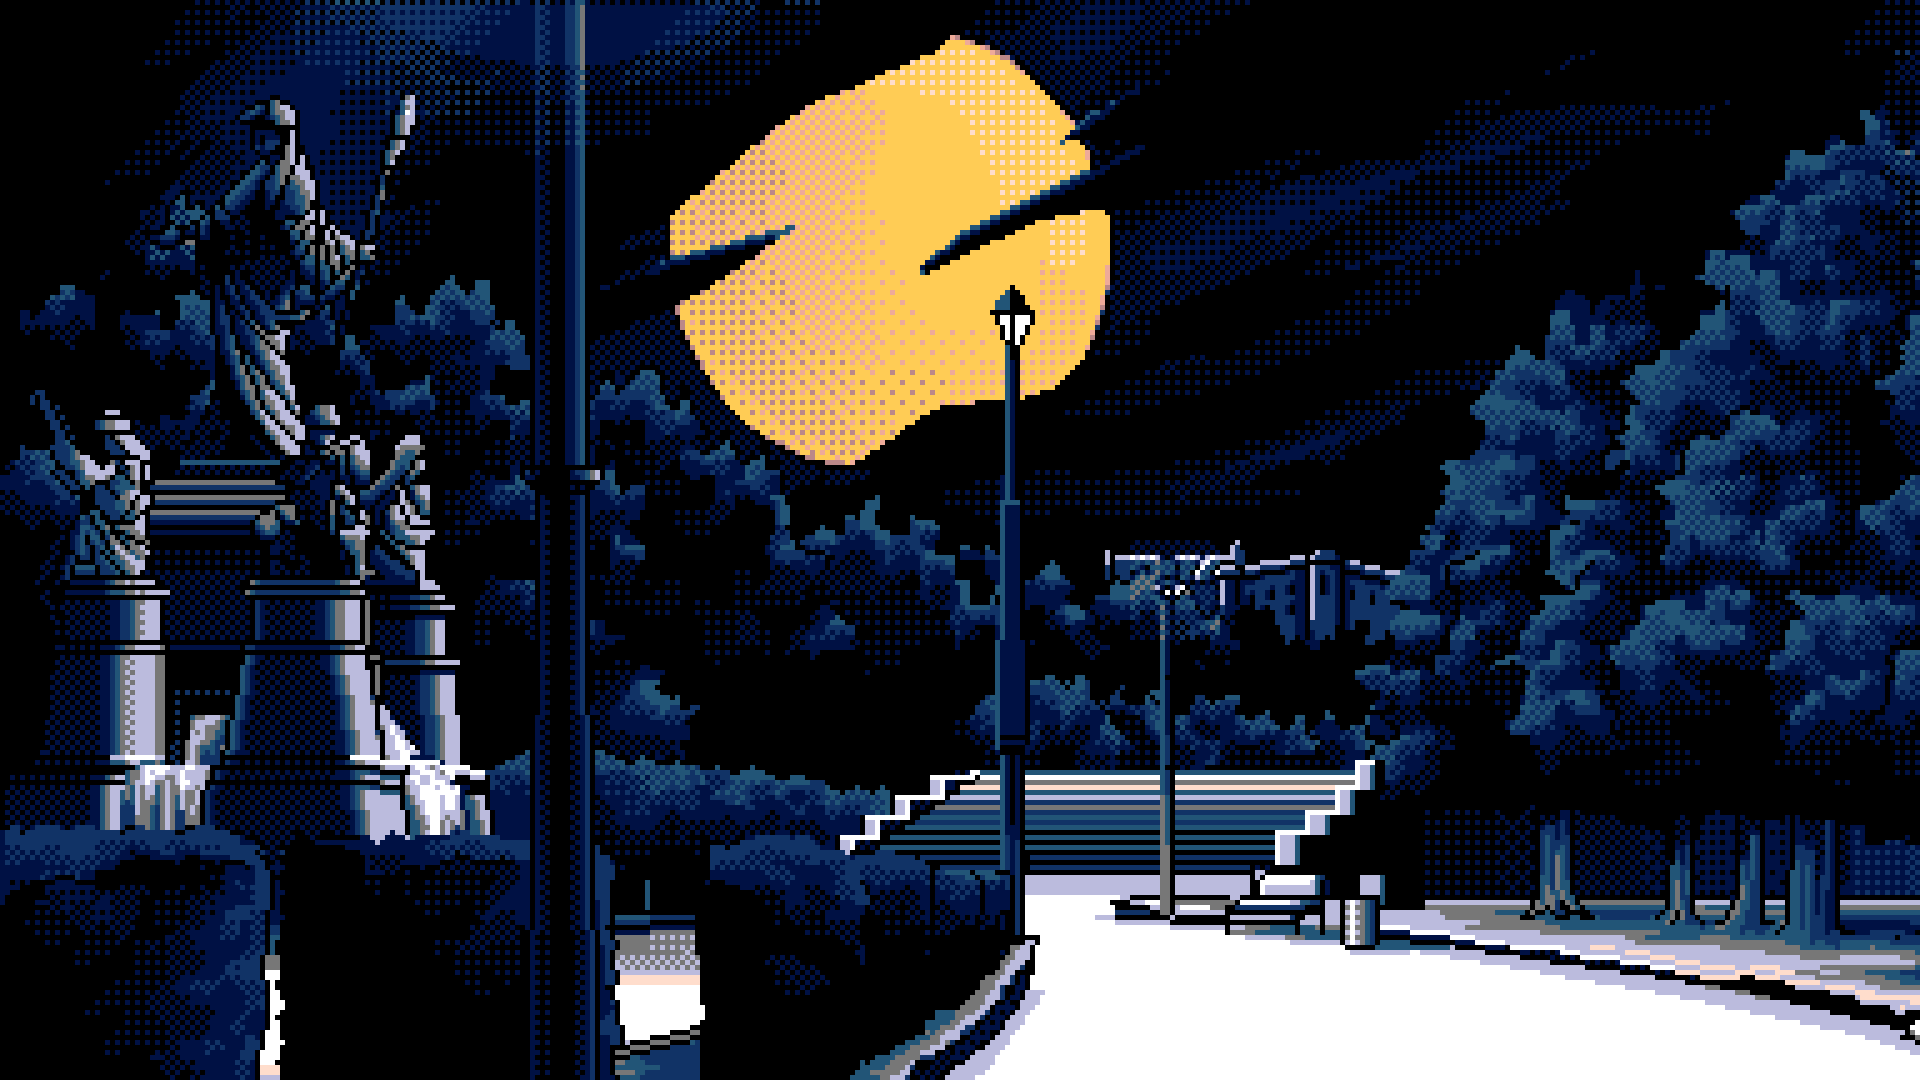 PC 98 Game CG Pixel Art Full Moon Statue Night Trees Street Light Lamp Artwork Digital Art Moon 1920x1080